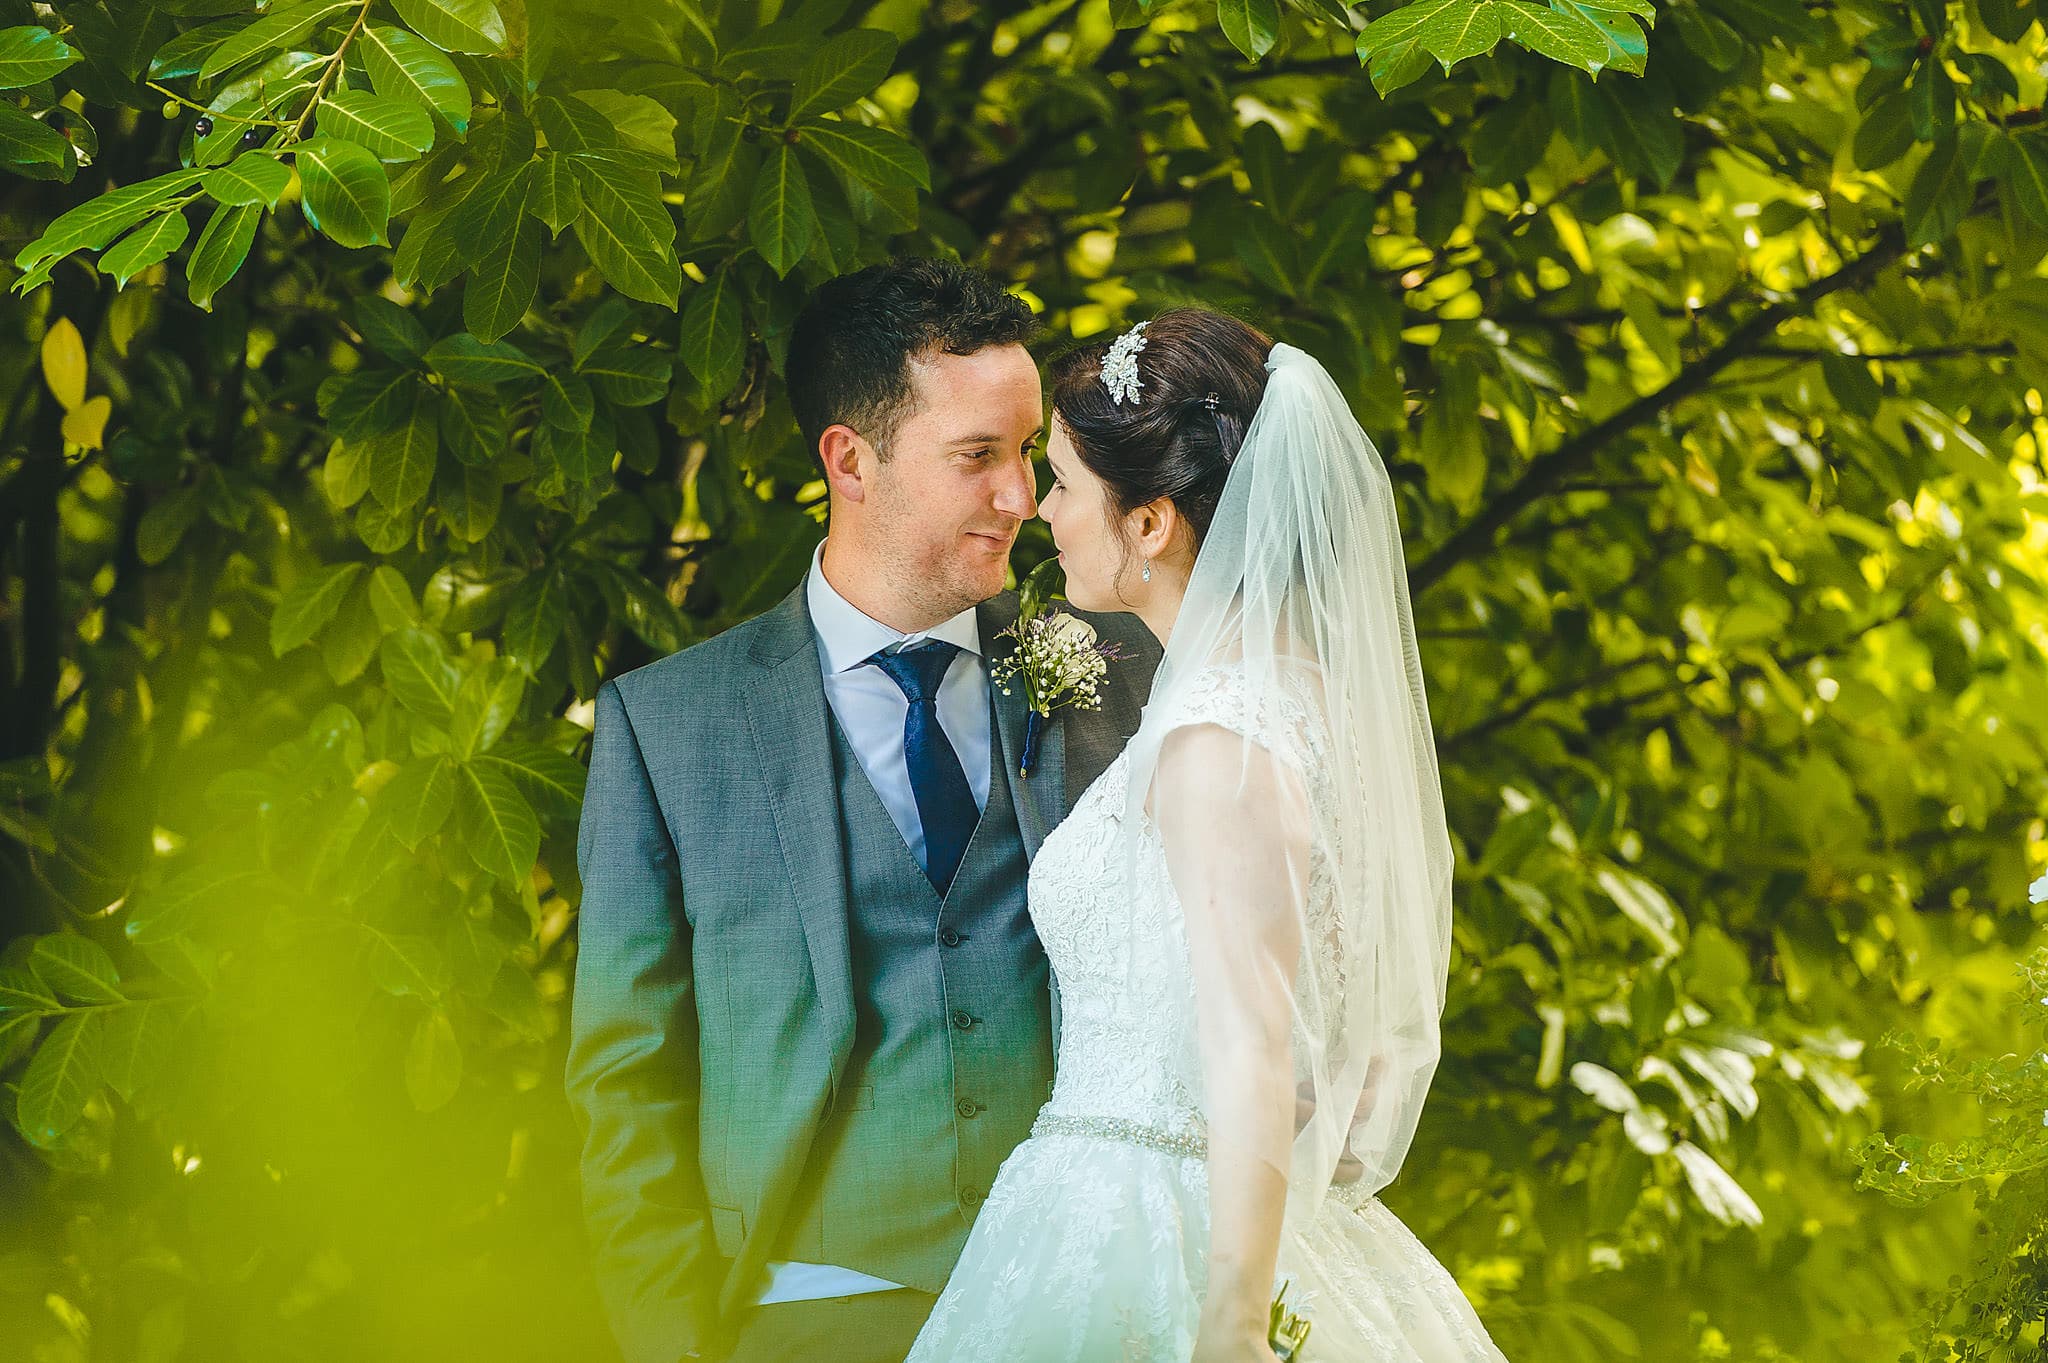 Munstone House Hereford wedding photography | Anna + Ben 3